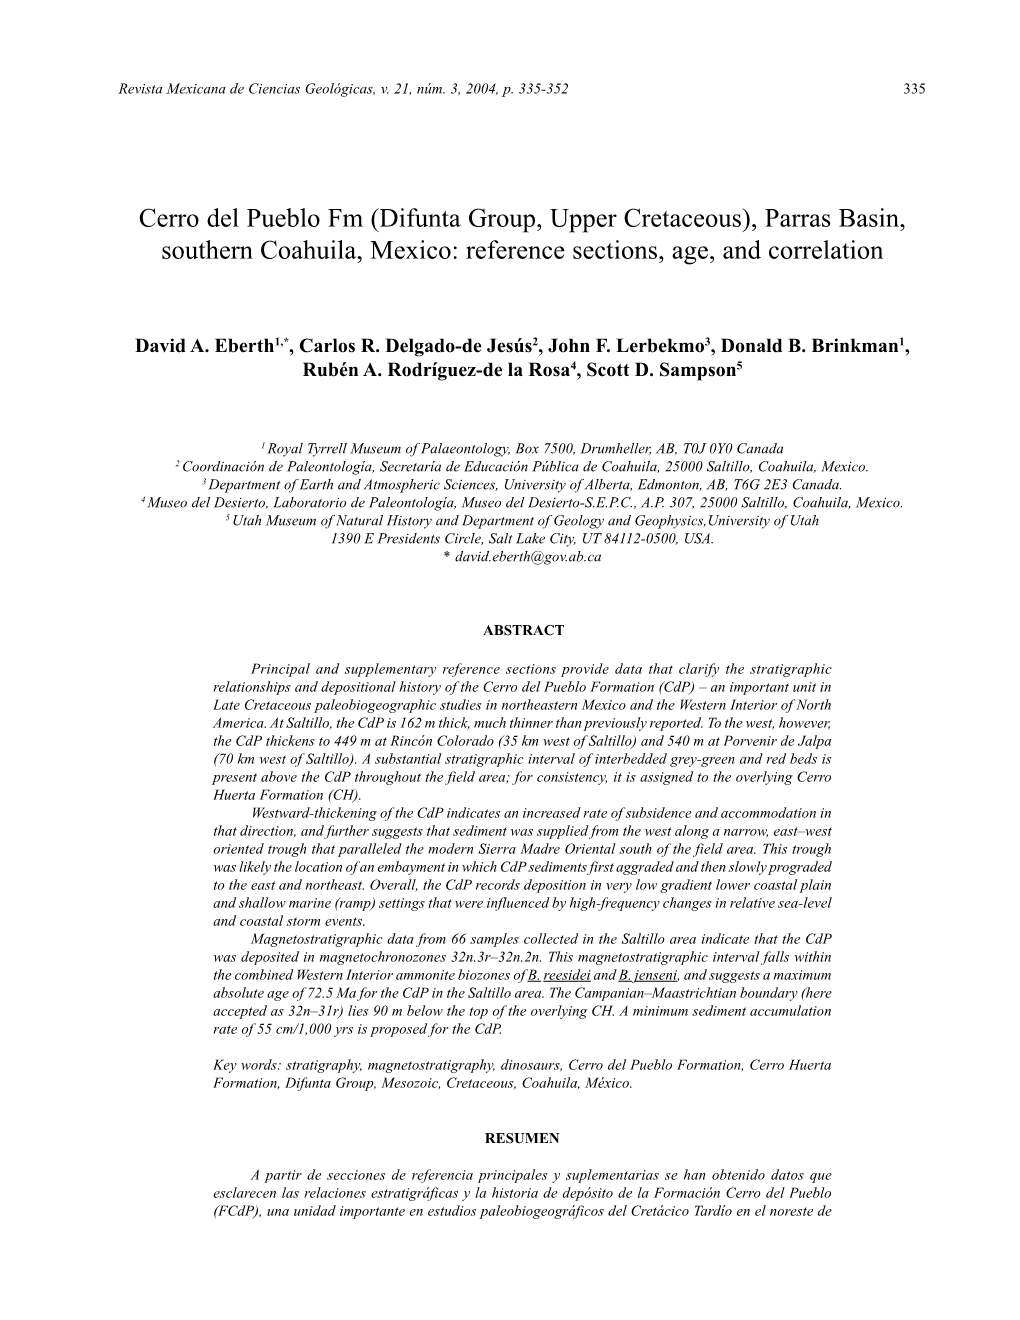 Cerro Del Pueblo Fm (Difunta Group, Upper Cretaceous), Parras Basin, Southern Coahuila, Mexico: Reference Sections, Age, and Correlation